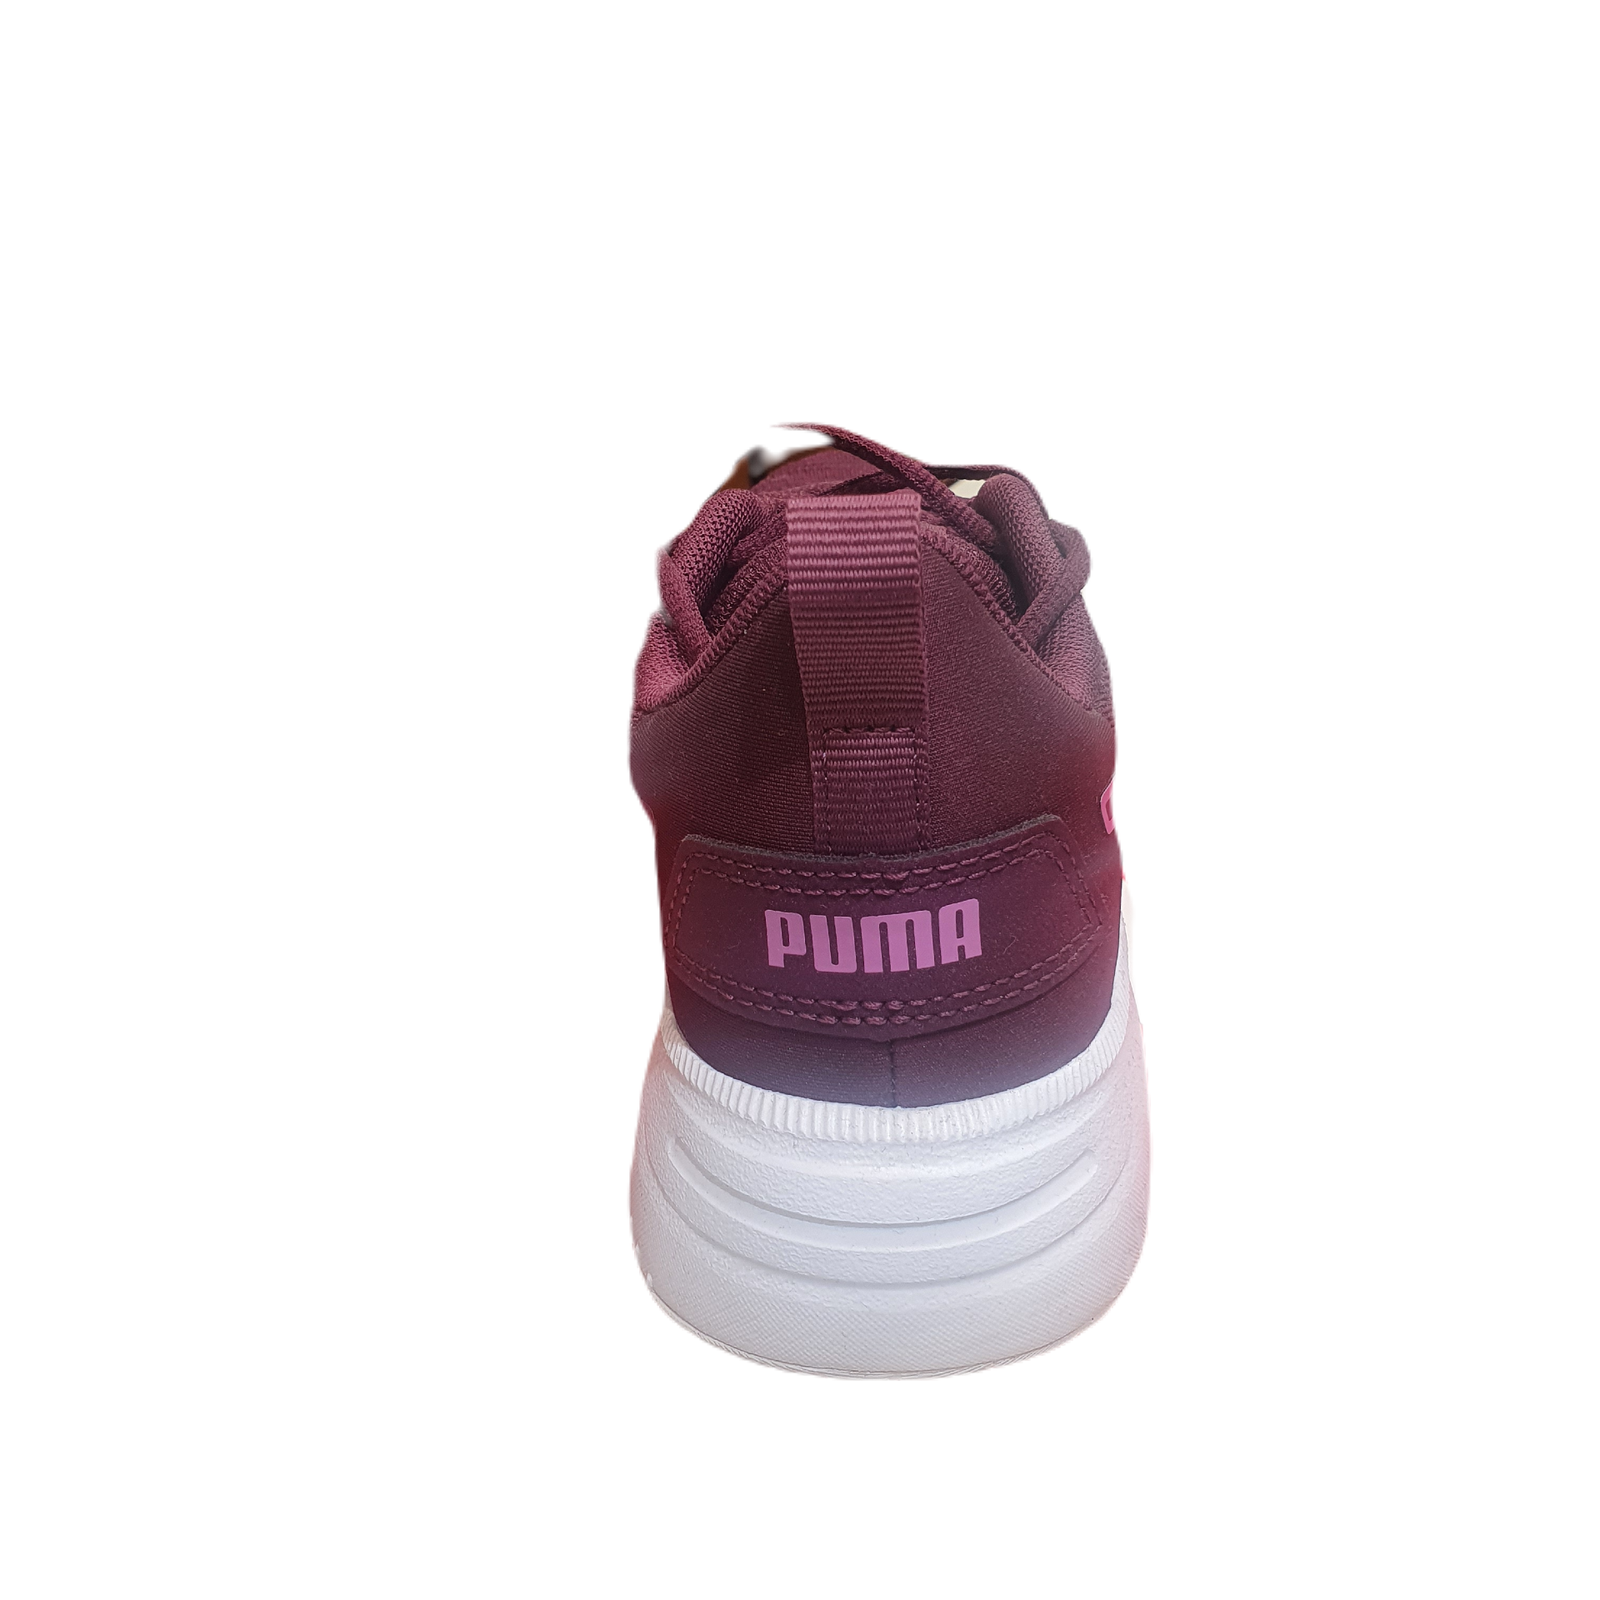 puma_shoes